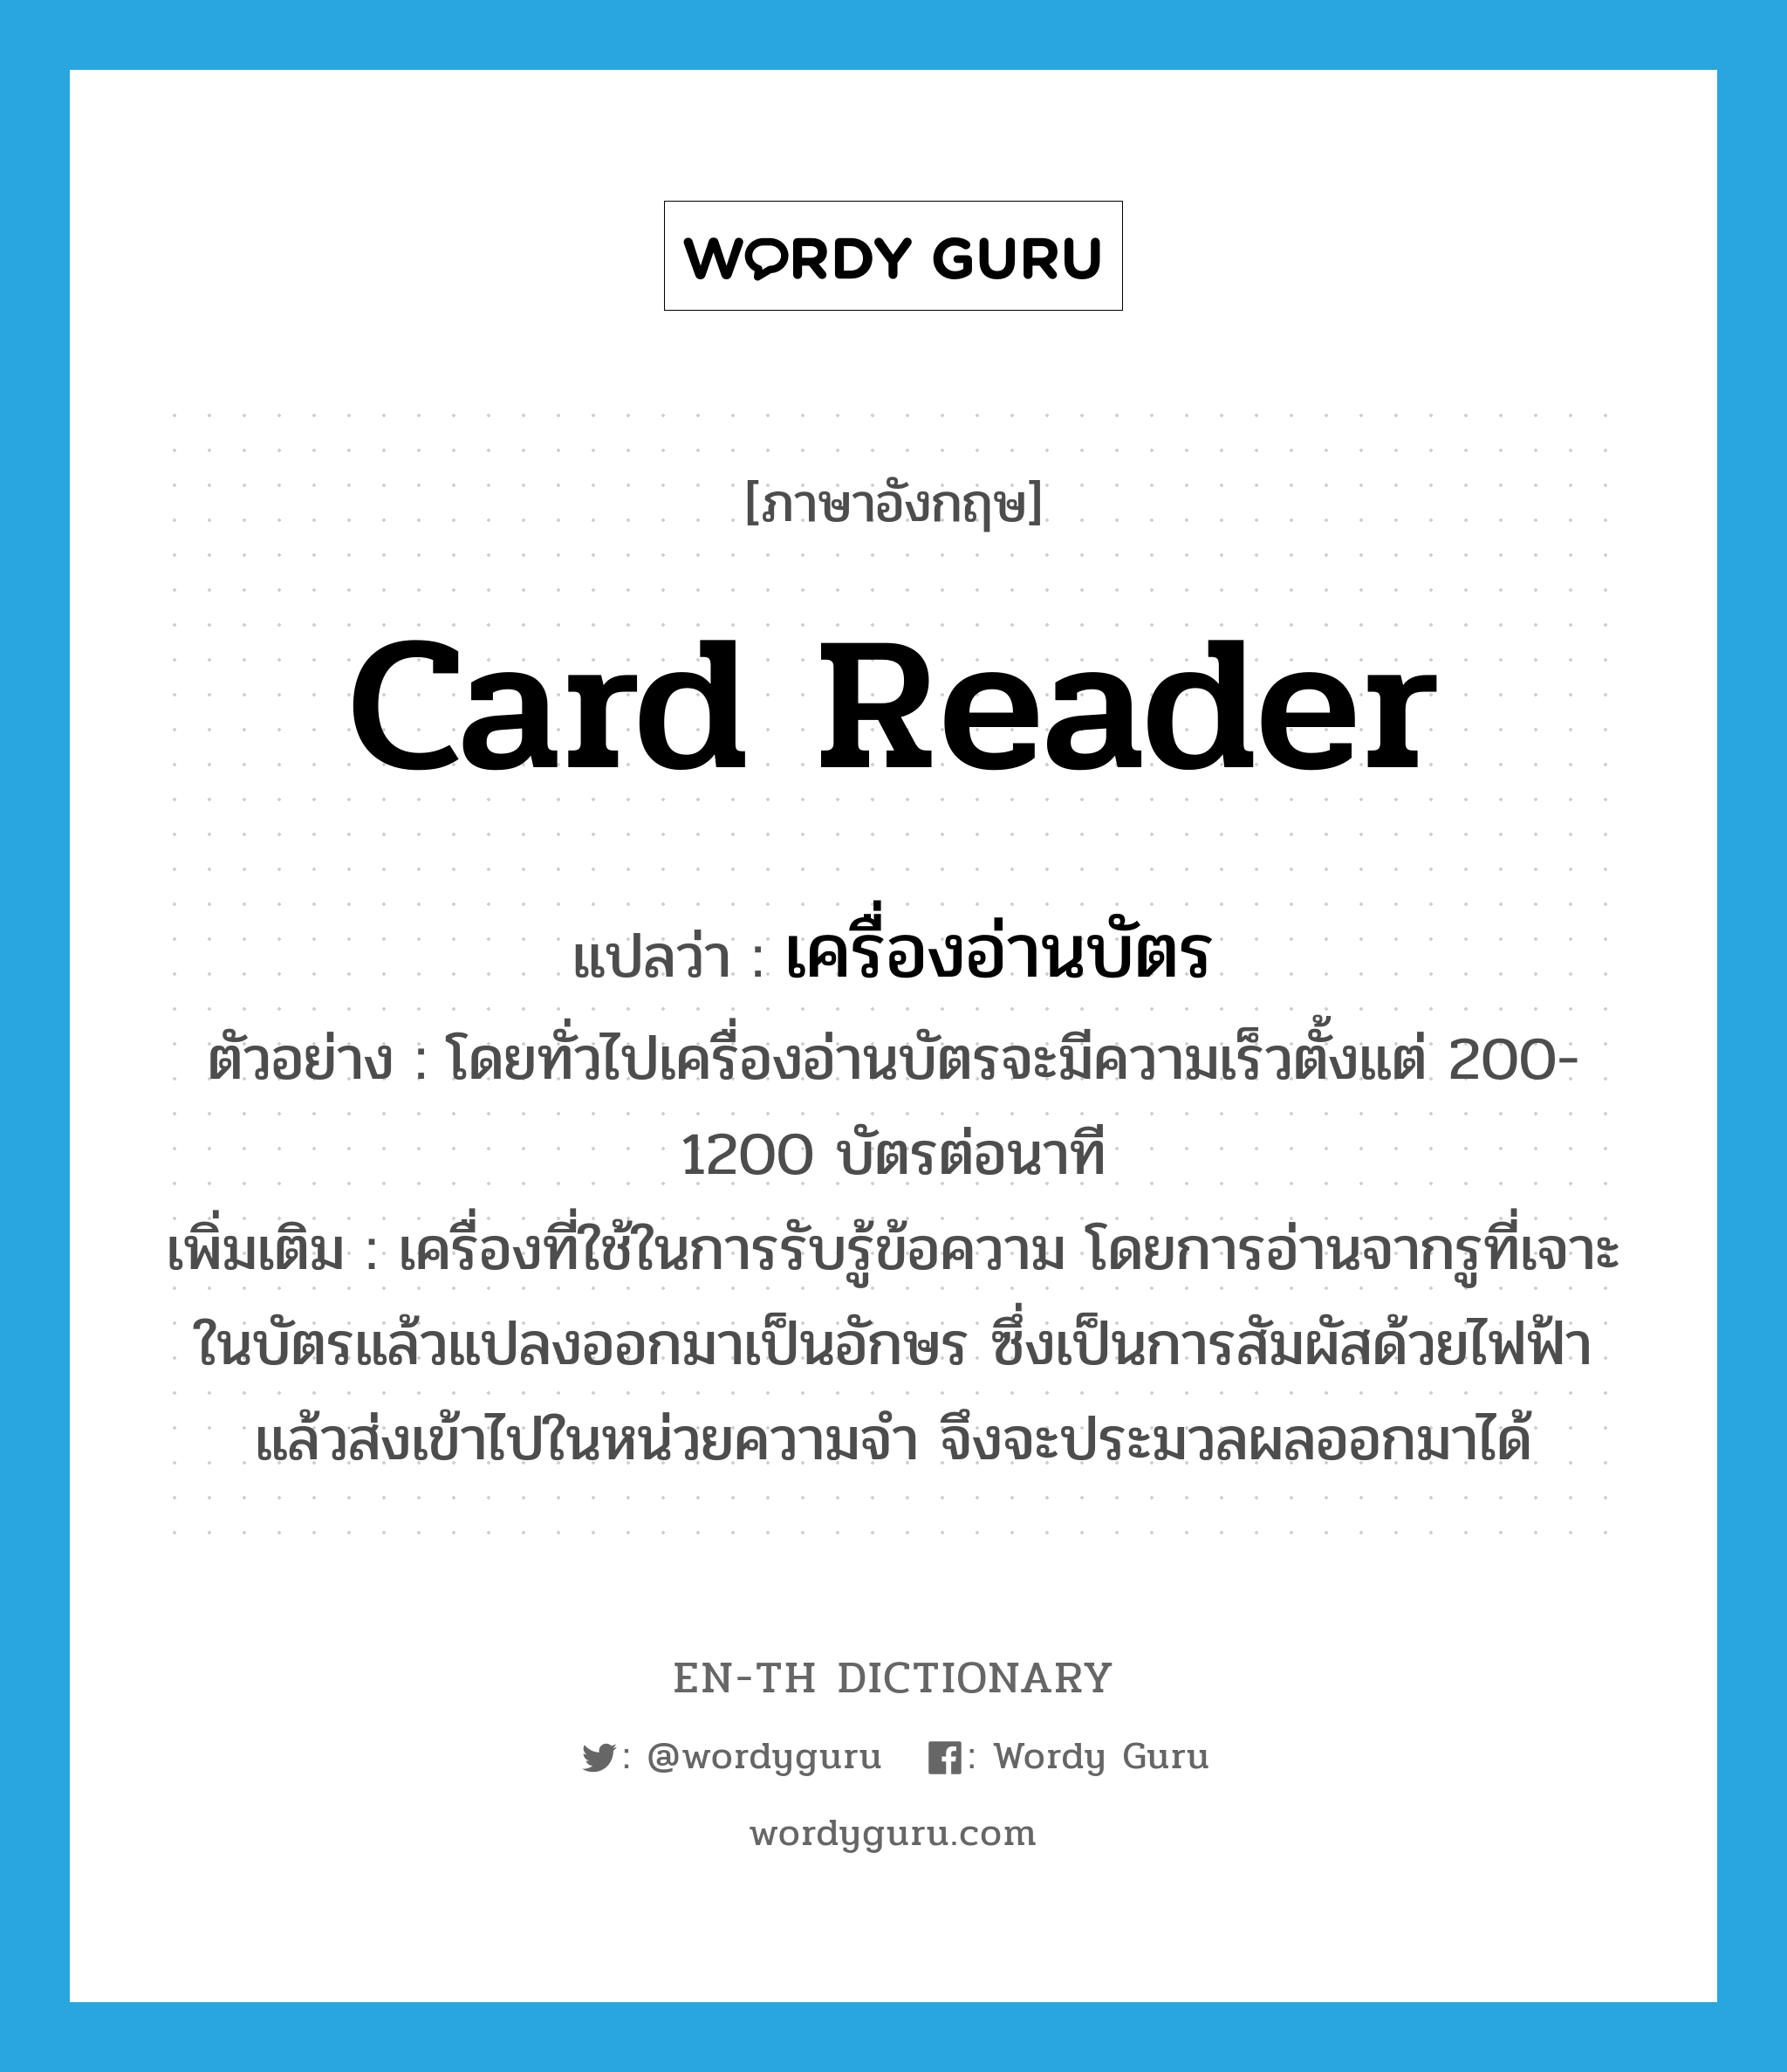 card reader แปลว่า?, คำศัพท์ภาษาอังกฤษ card reader แปลว่า เครื่องอ่านบัตร ประเภท N ตัวอย่าง โดยทั่วไปเครื่องอ่านบัตรจะมีความเร็วตั้งแต่ 200-1200 บัตรต่อนาที เพิ่มเติม เครื่องที่ใช้ในการรับรู้ข้อความ โดยการอ่านจากรูที่เจาะในบัตรแล้วแปลงออกมาเป็นอักษร ซึ่งเป็นการสัมผัสด้วยไฟฟ้าแล้วส่งเข้าไปในหน่วยความจำ จึงจะประมวลผลออกมาได้ หมวด N